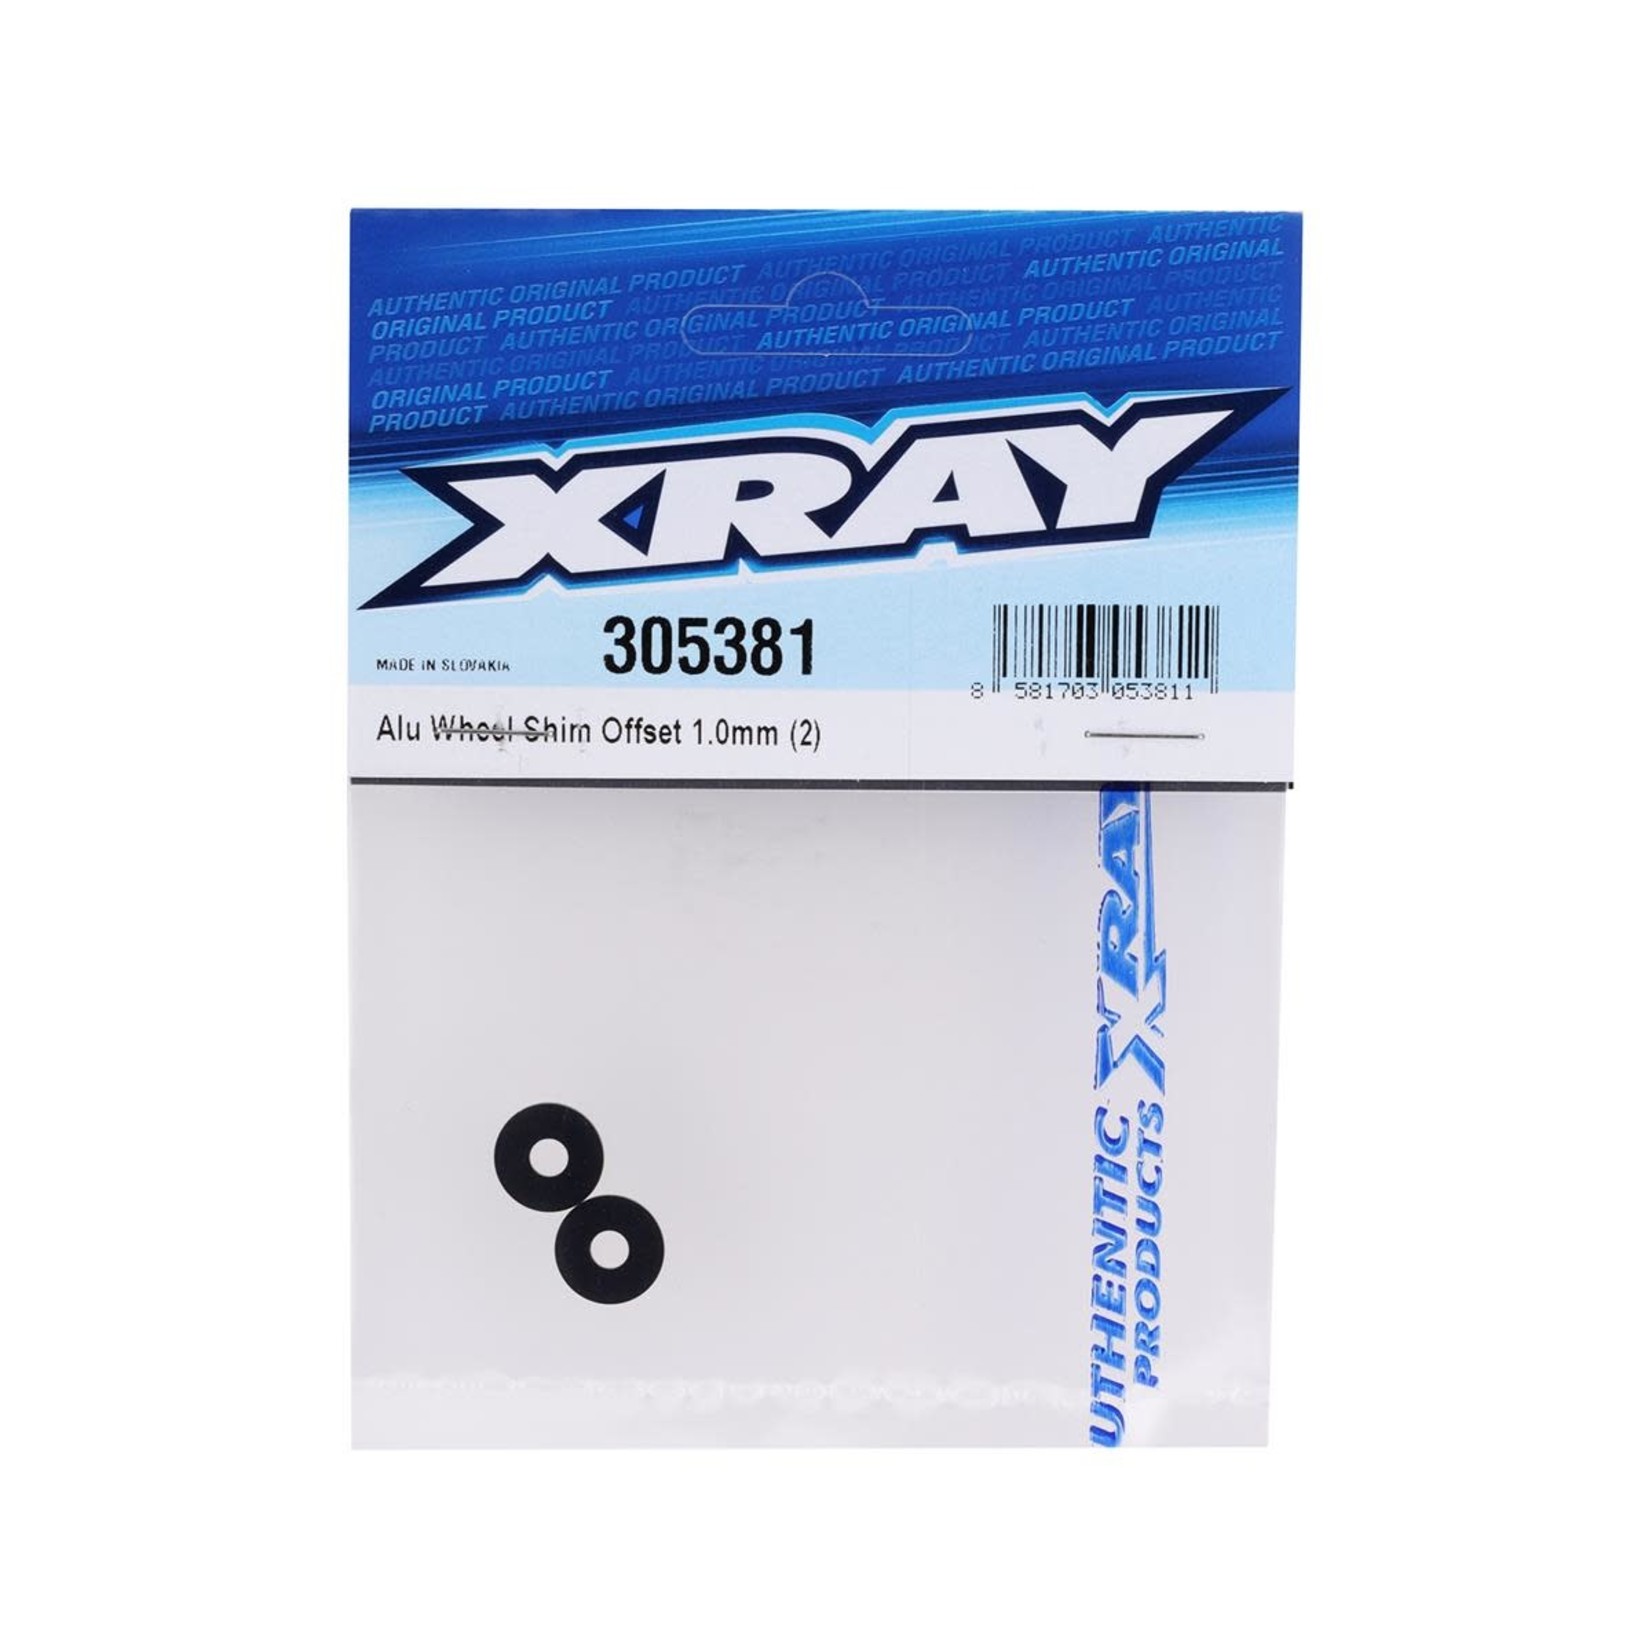 Redcat Racing XRAY 1.0mm Aluminum Offset Wheel Shim (2) #305381